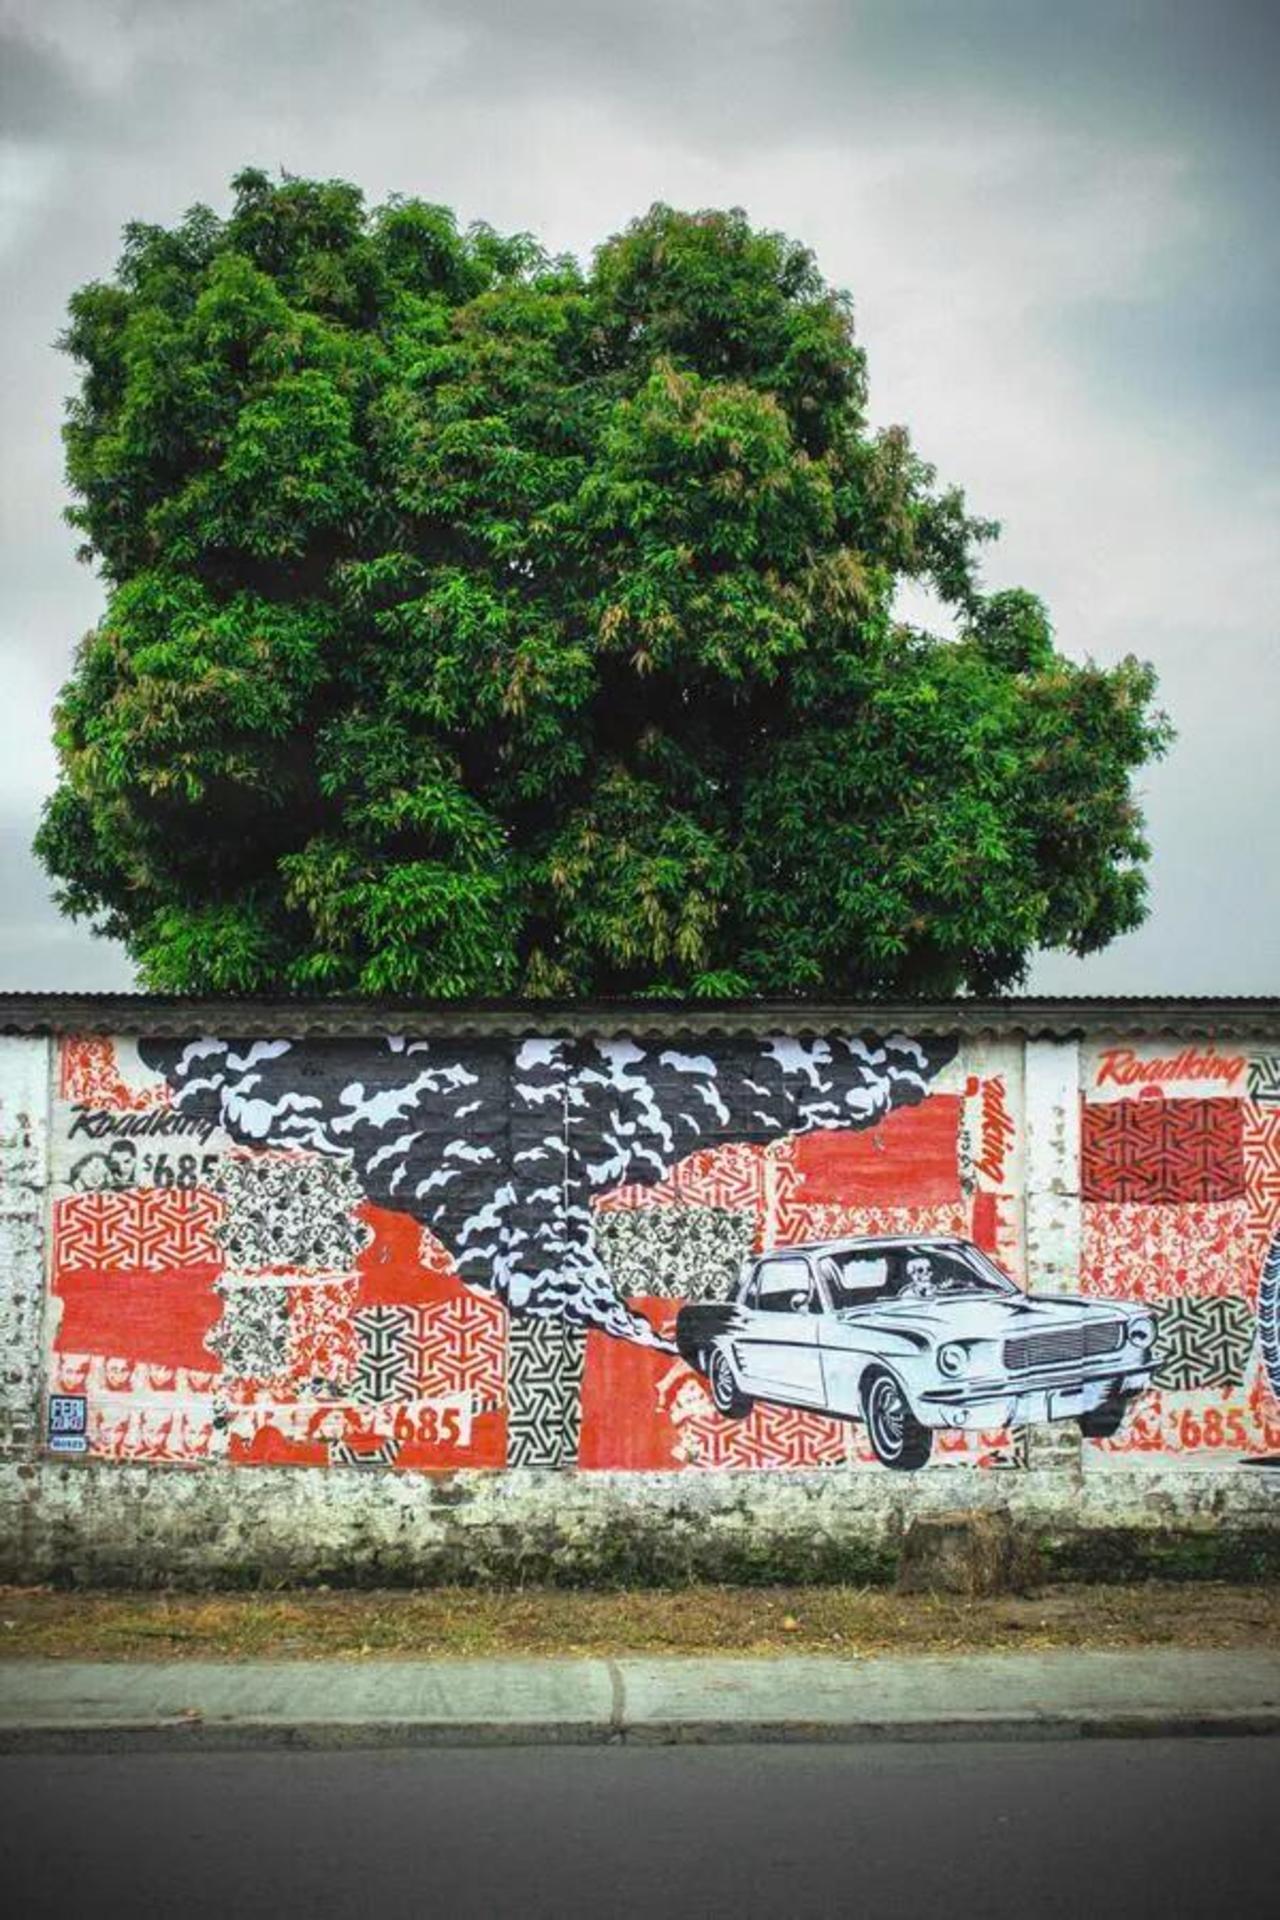 RT @QueGraffiti: 'De gris a verde.'
Pieza de Ferizuku en Colombia #streetart #mural #graffiti #art http://t.co/AHgKVBtUyy